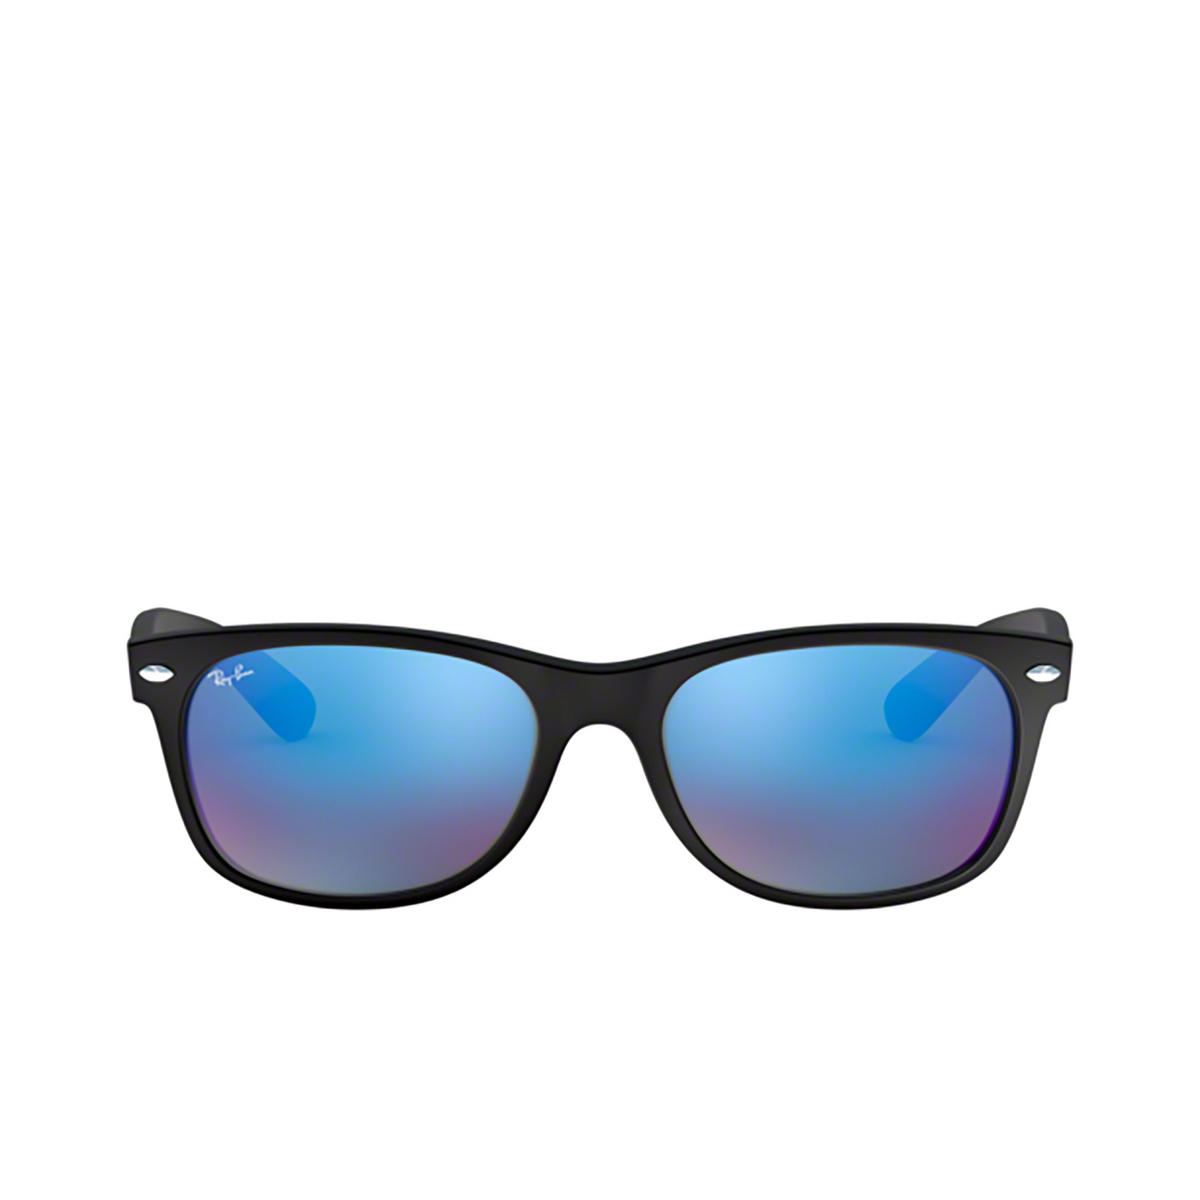 Ray-Ban NEW WAYFARER Sunglasses 622/17 RUBBER BLACK - front view